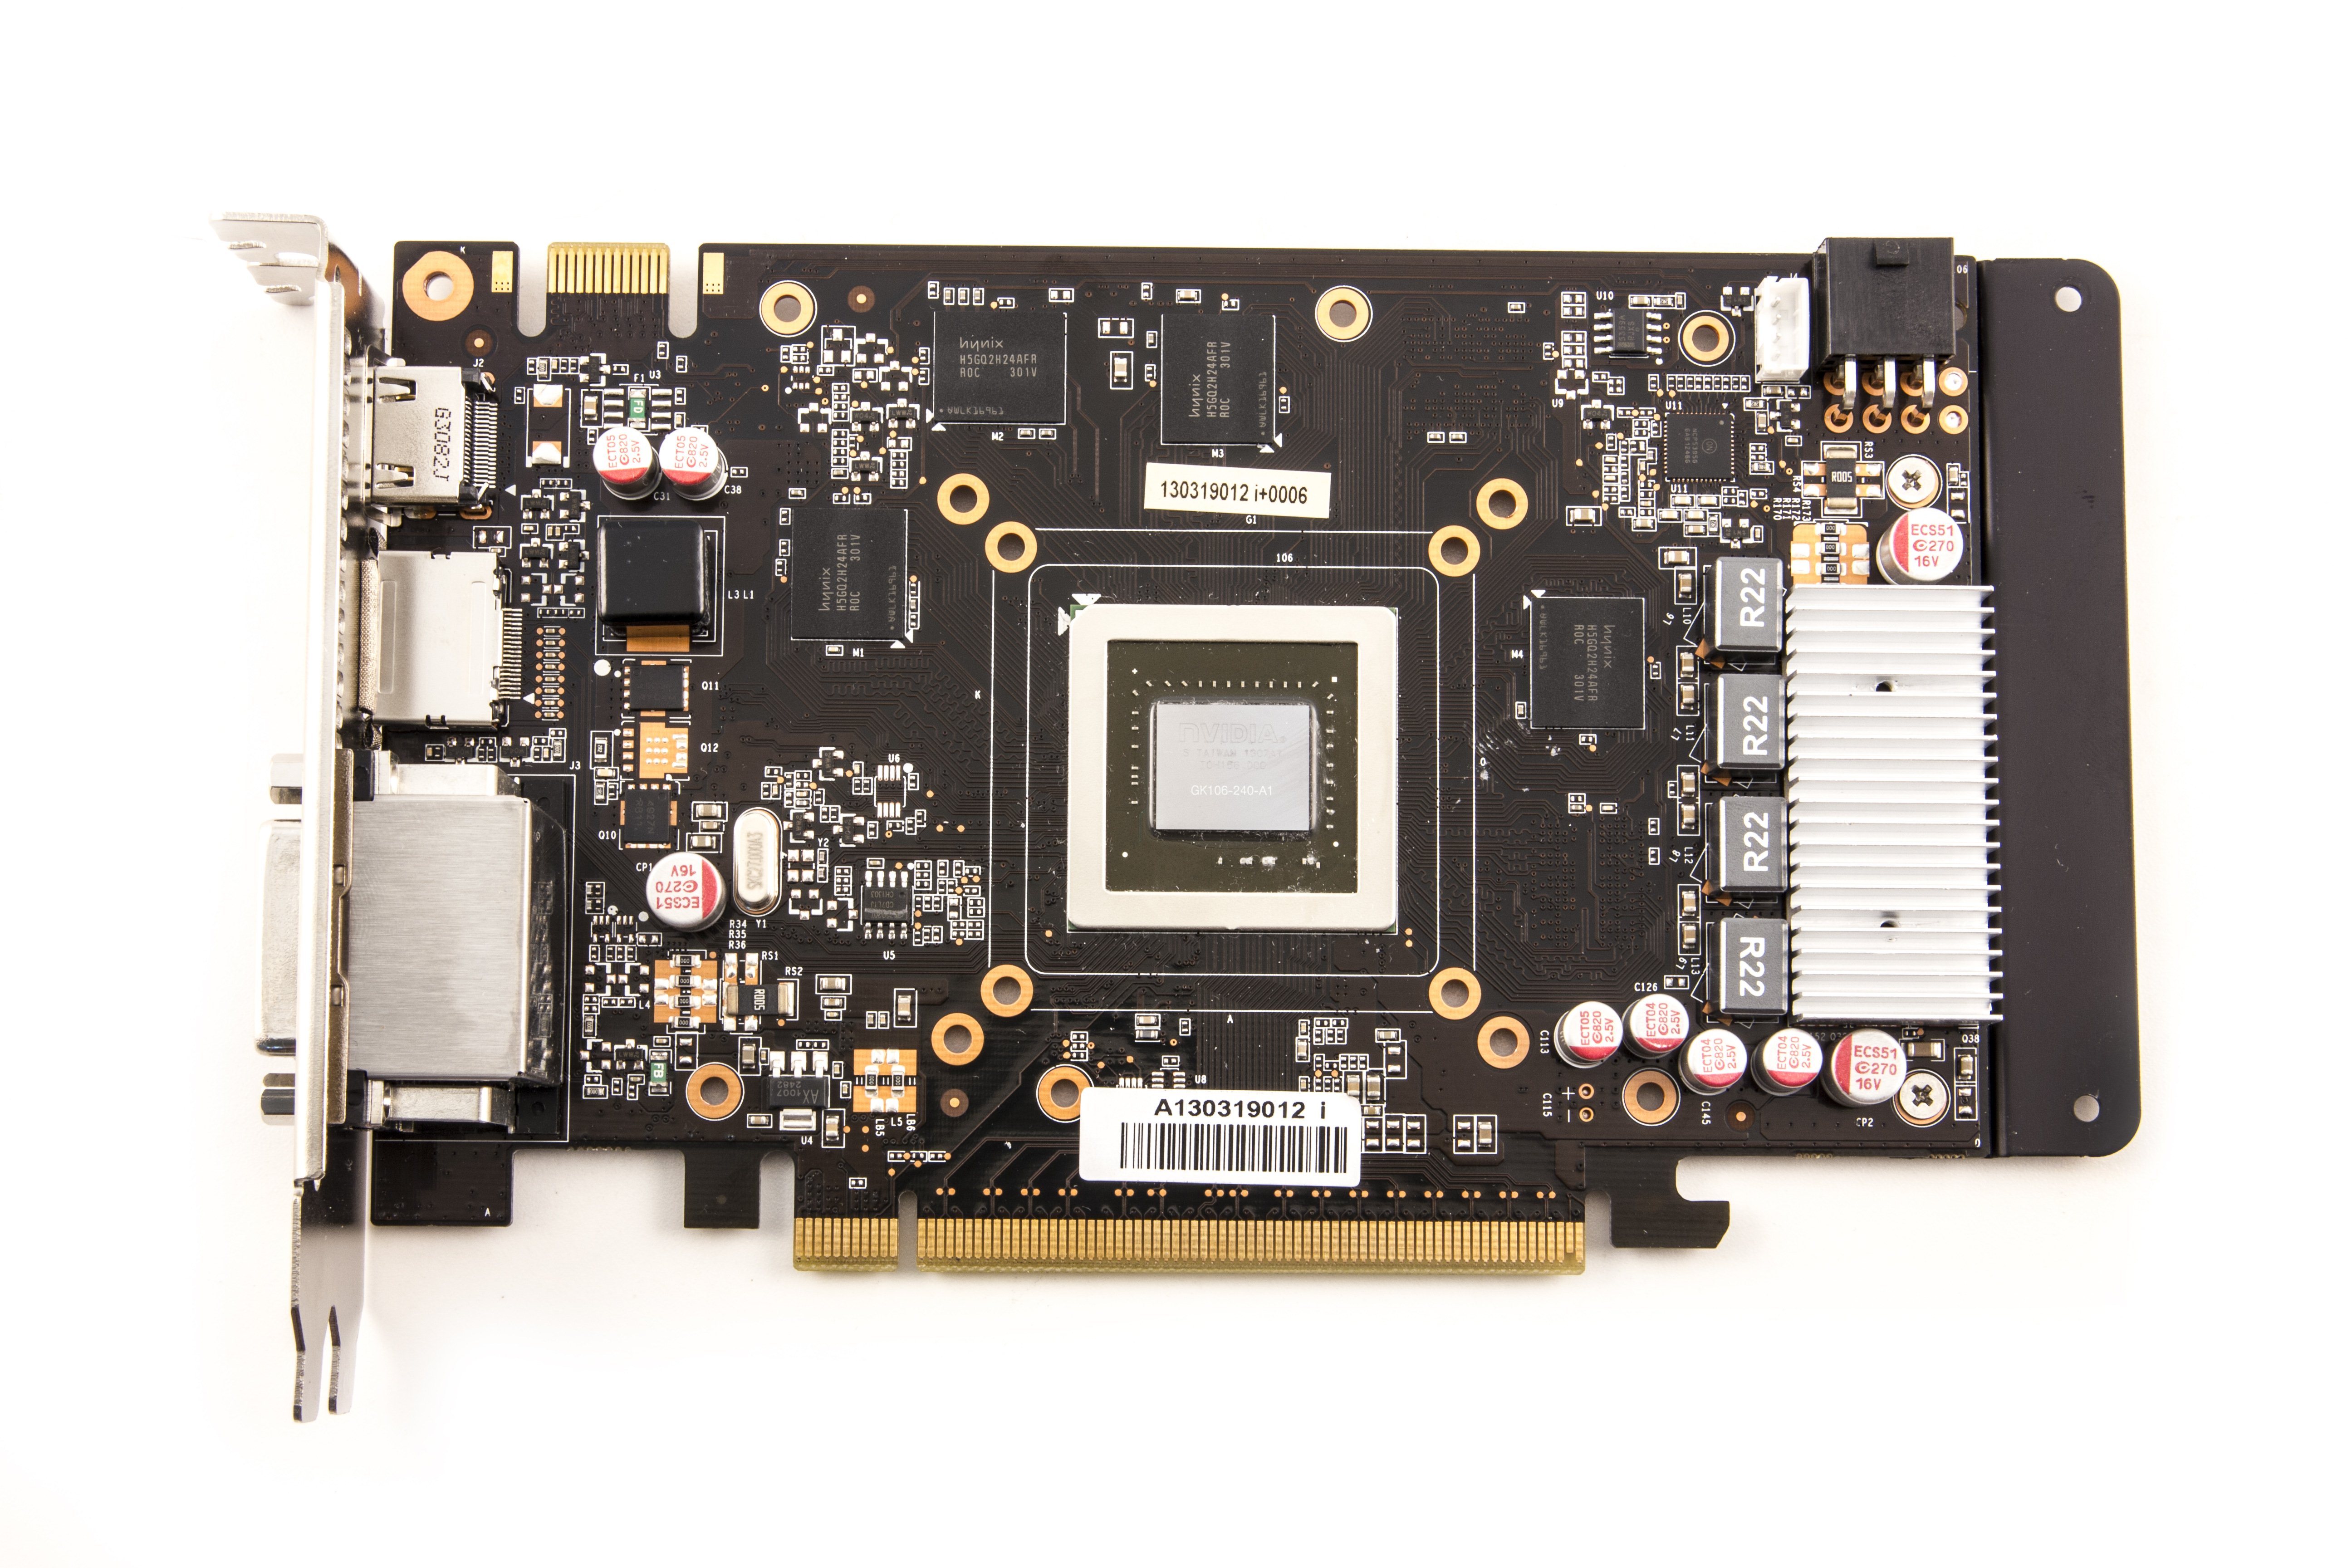 Divert trial convergence Gainward GeForce GTX 650 Ti BOOST 2GB Golden Sample Graphics Card